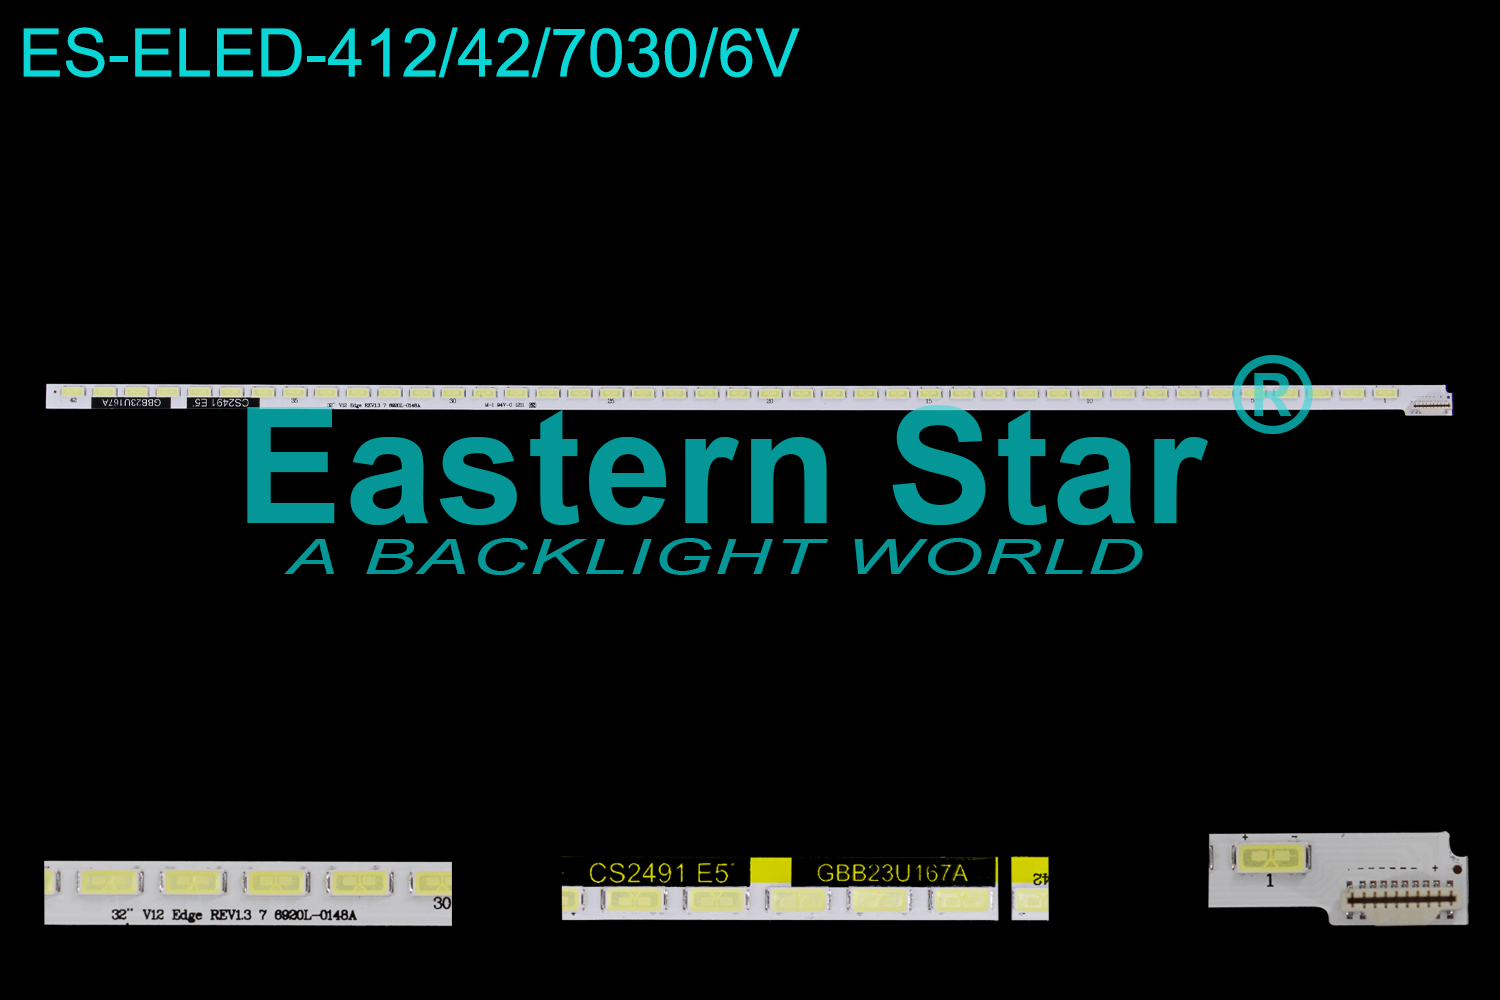 ES-ELED-412 ELED/EDGE TV backlight use for 32'' 32LS3500 32"  V12 Edge REV1.3 7 6920L-0148A  CS2491 E5 GBB23U167A  LED STRIPS(1)